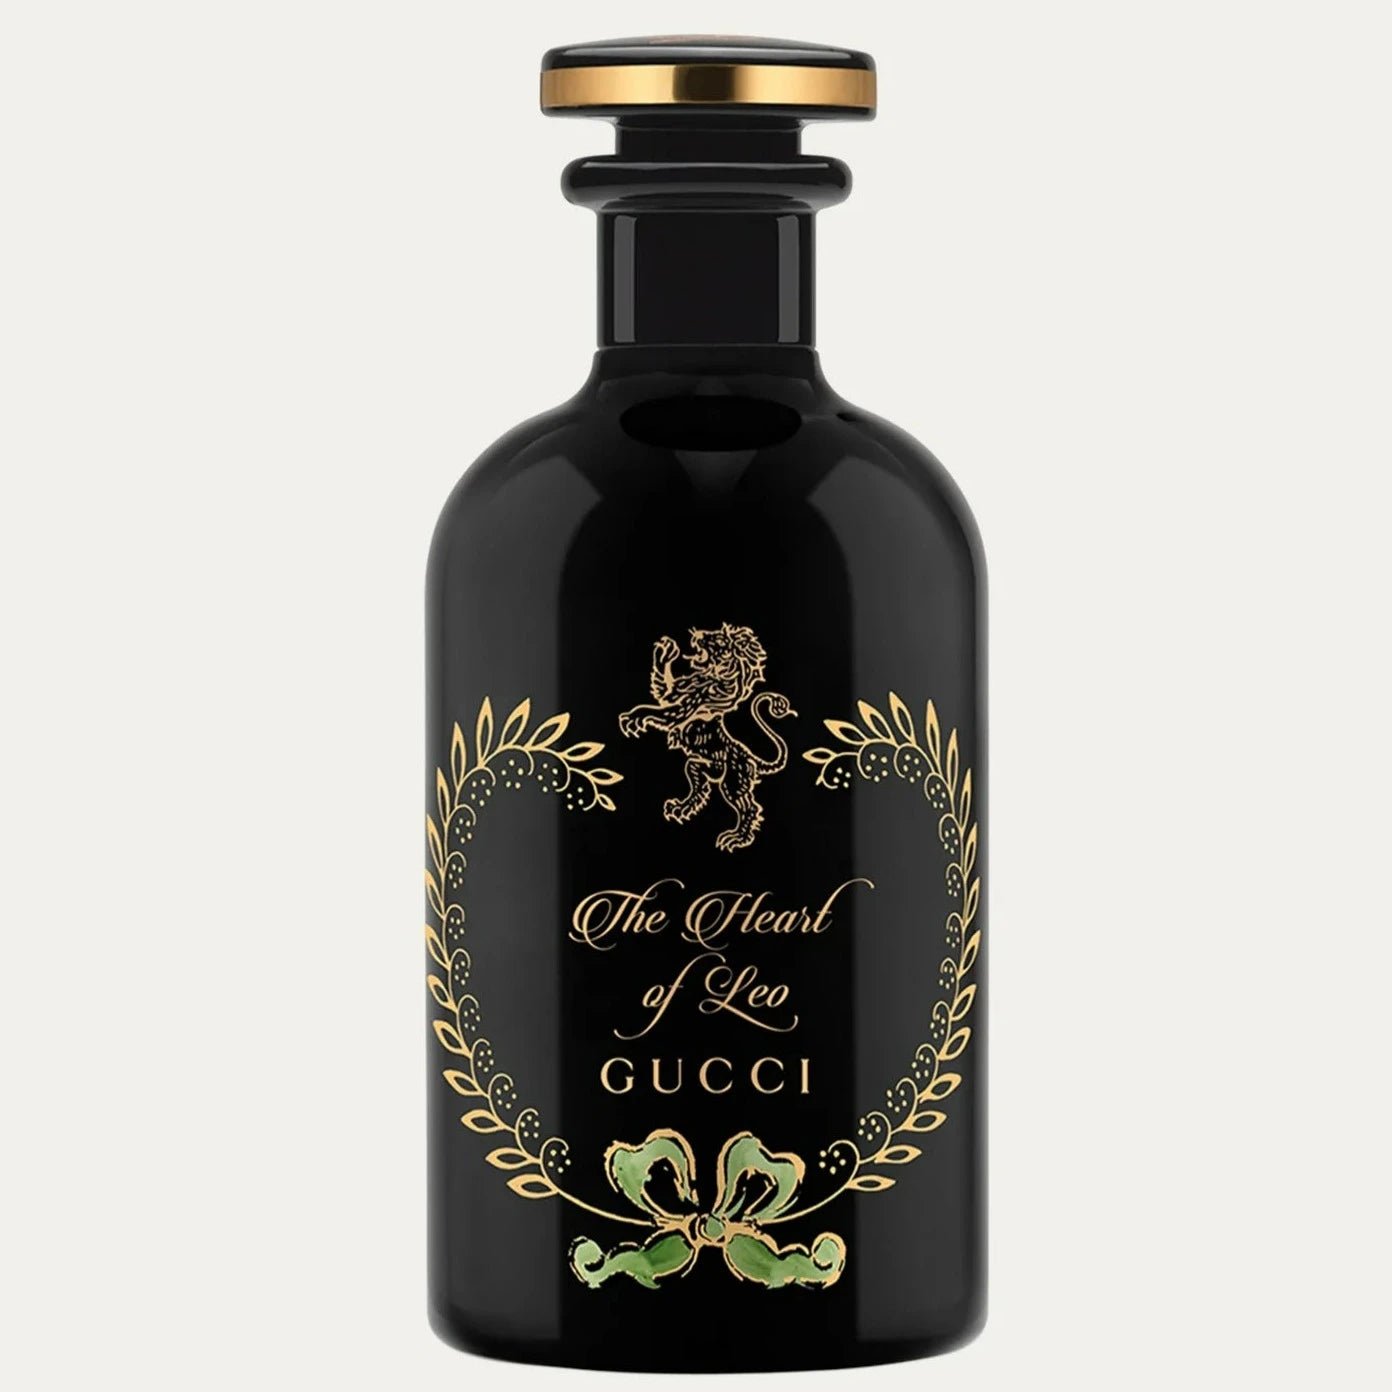 Gucci The Heart Of Leo EDP Sp | My Perfume Shop Australia